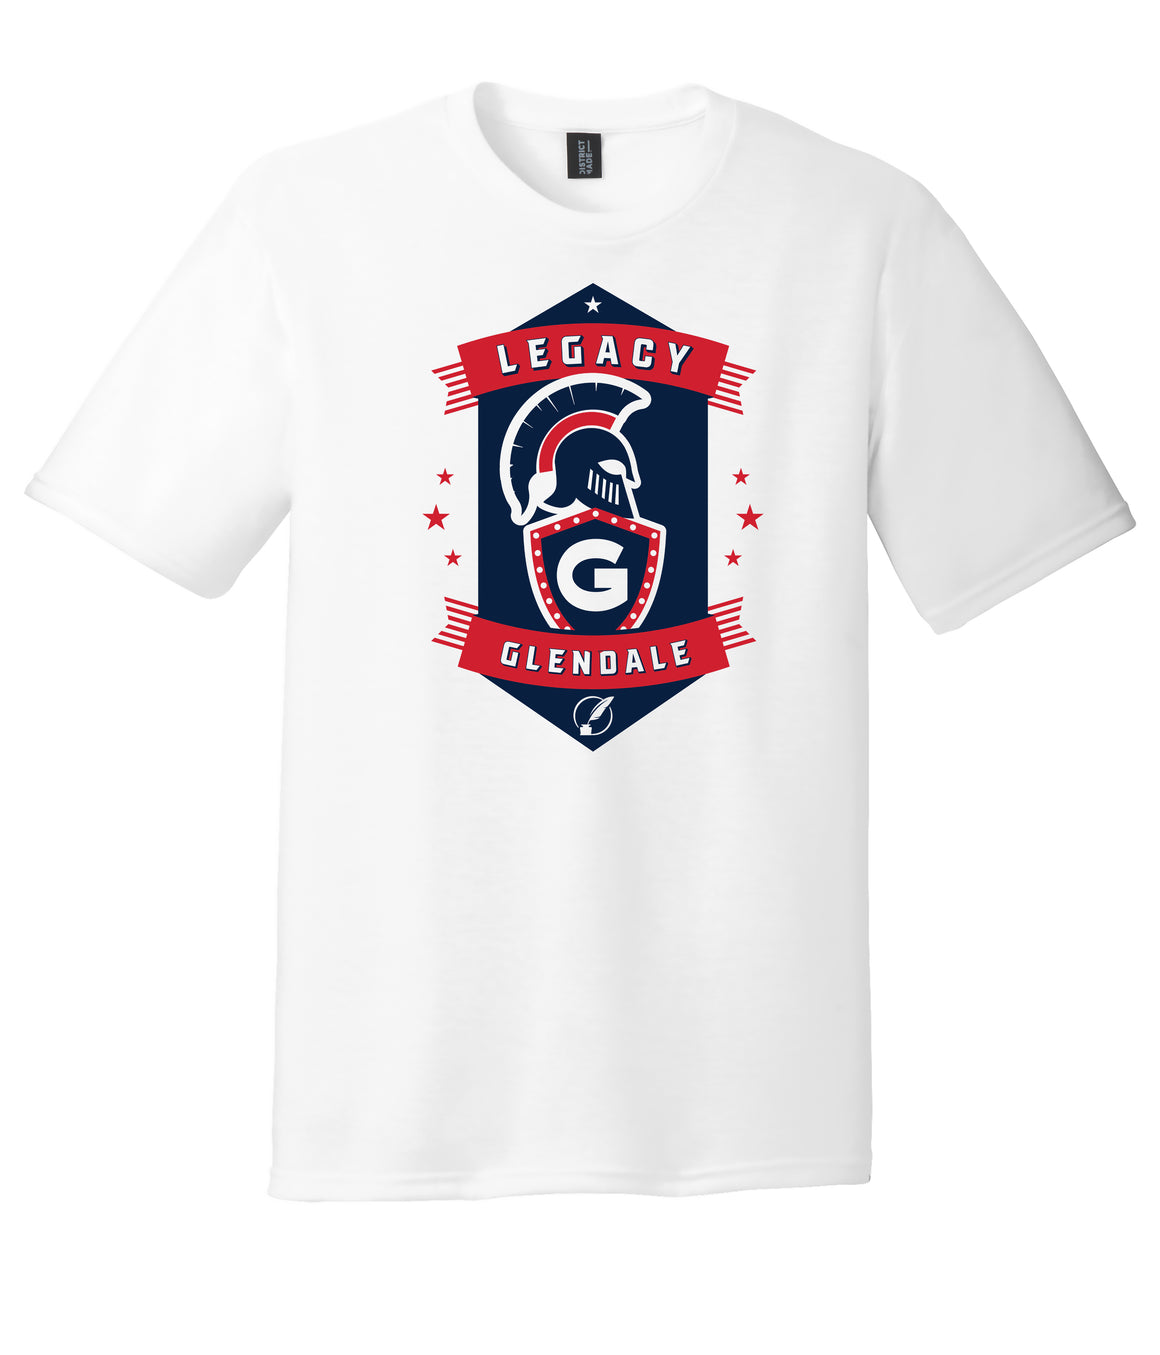 Legacy Traditional School Glendale - White Spirit Day Shirt w/Mascot